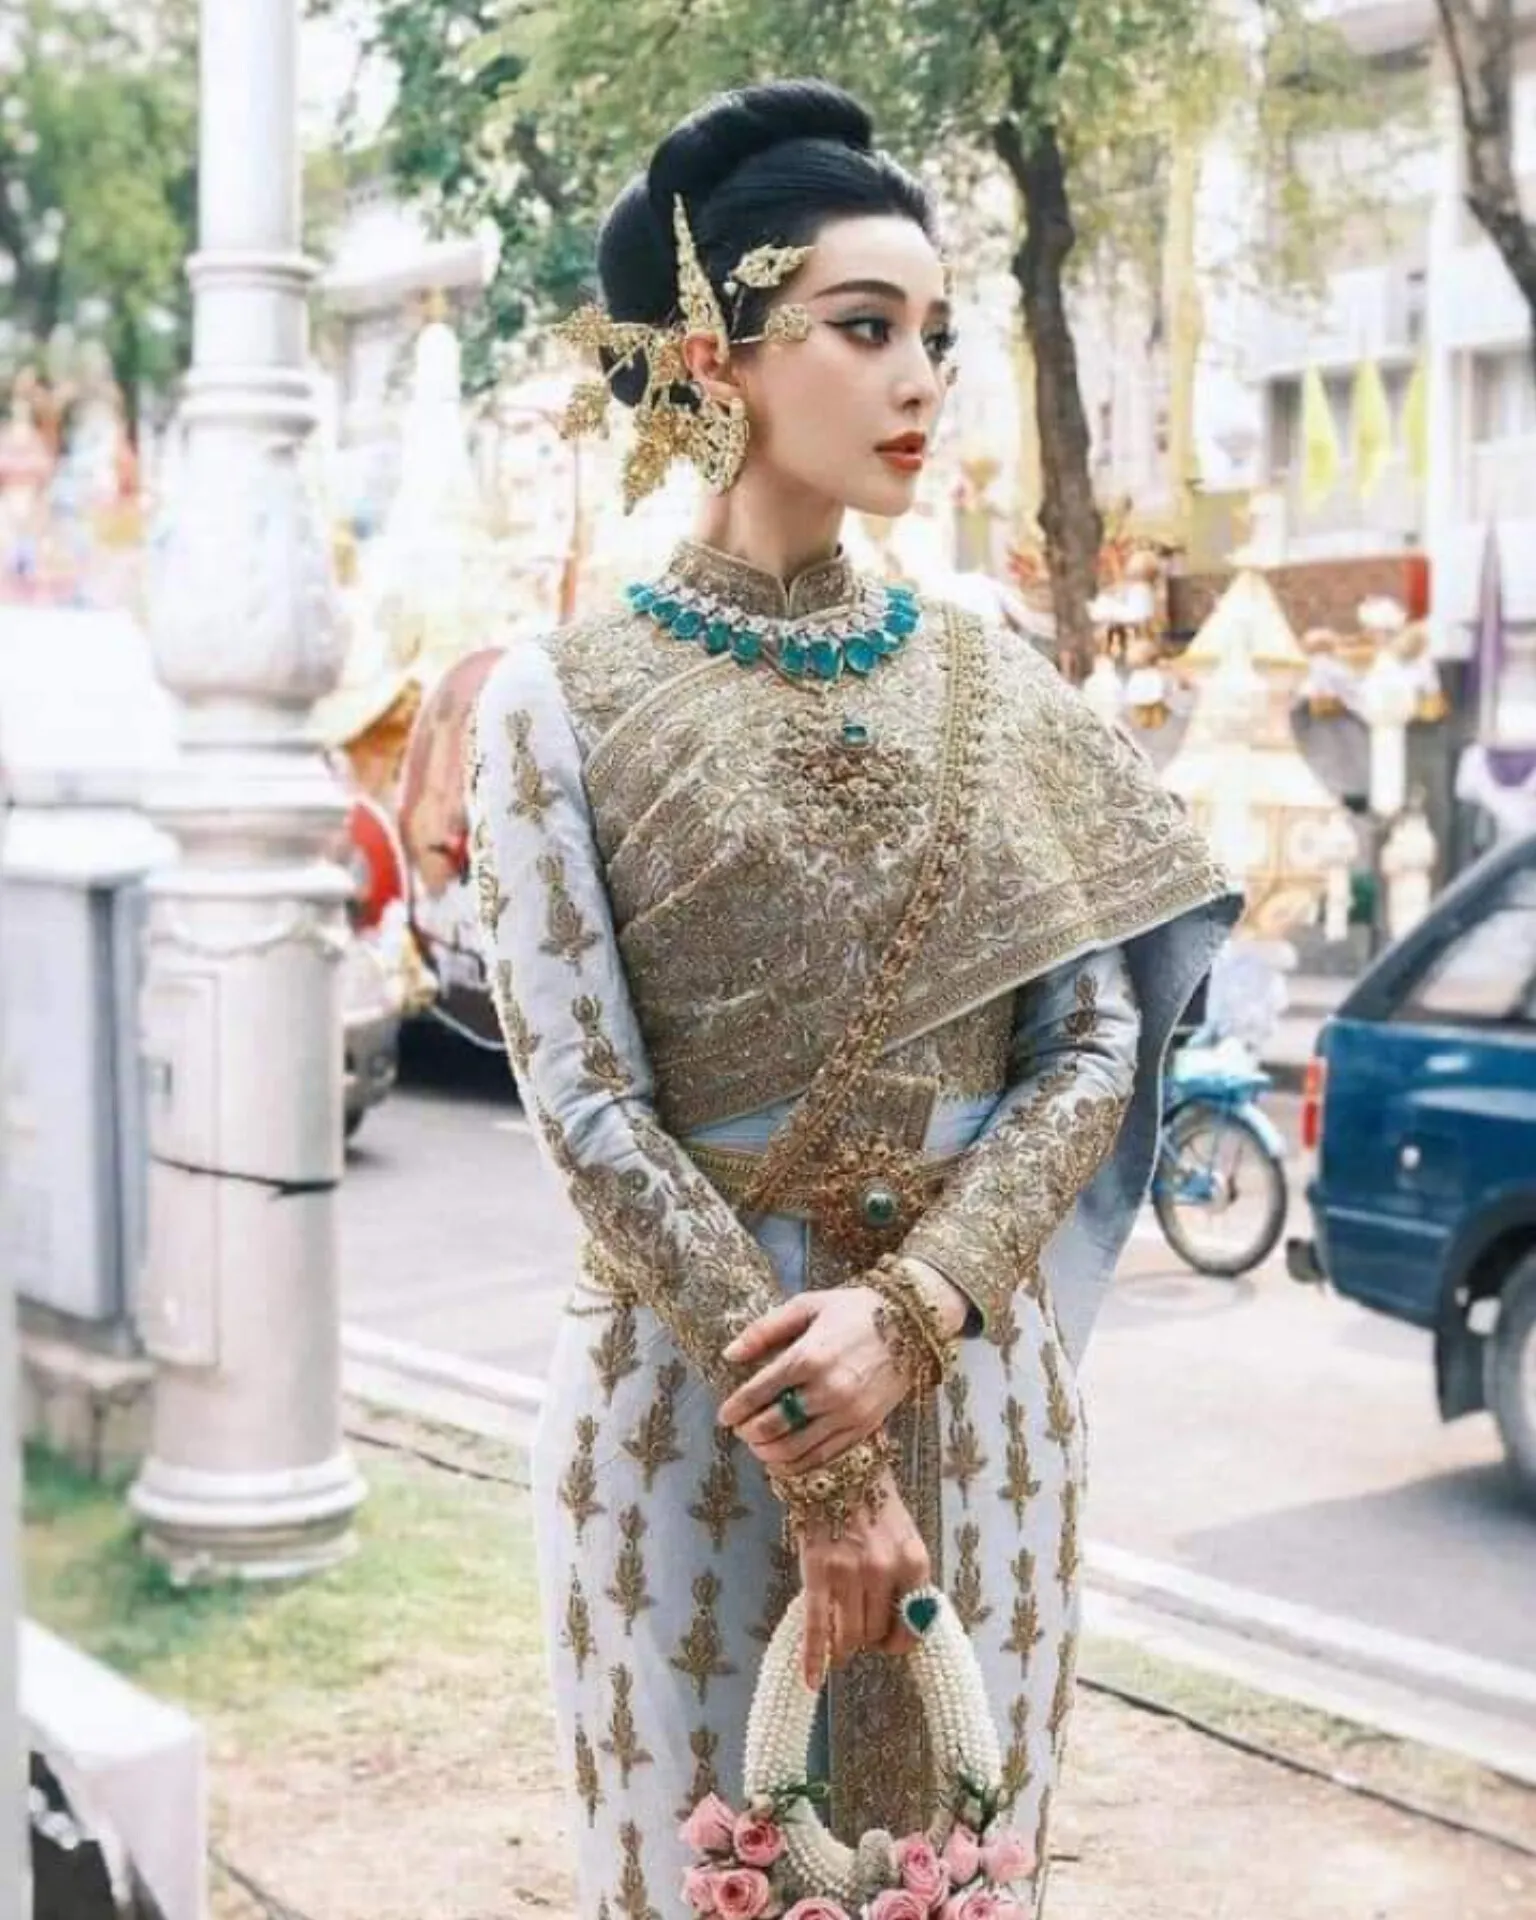 Fan BibngBing Thai dress